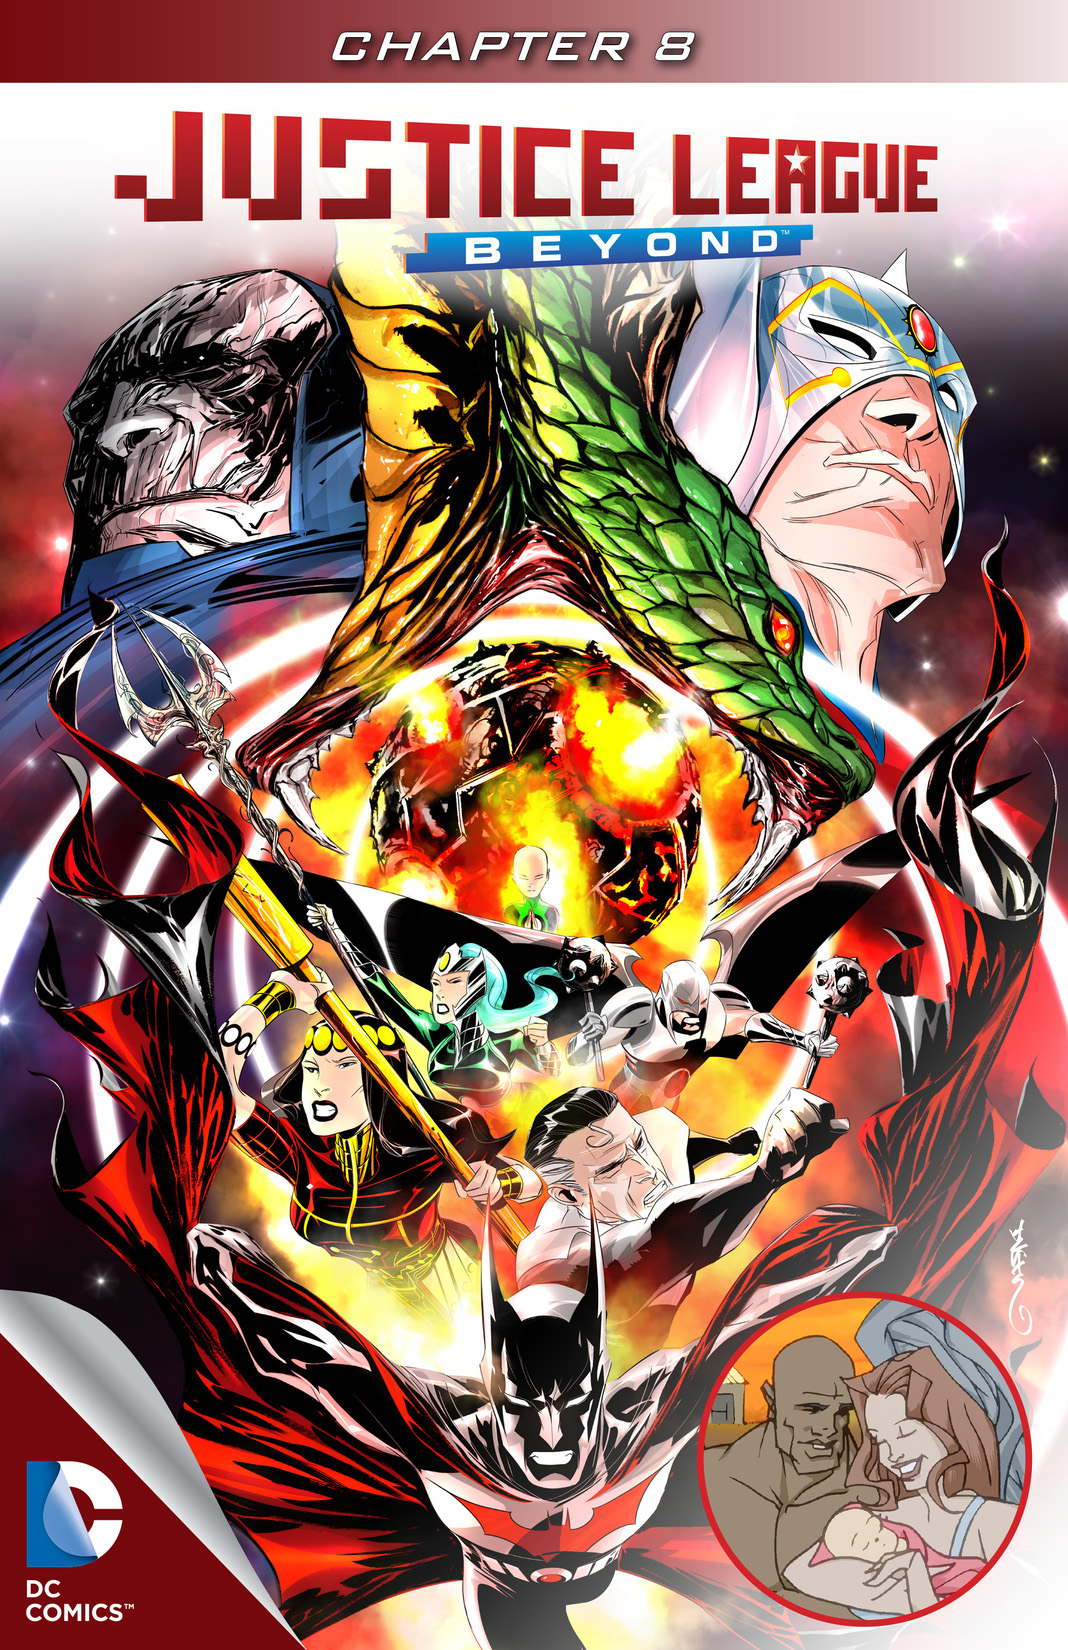 Justice League Beyond #8 preview images